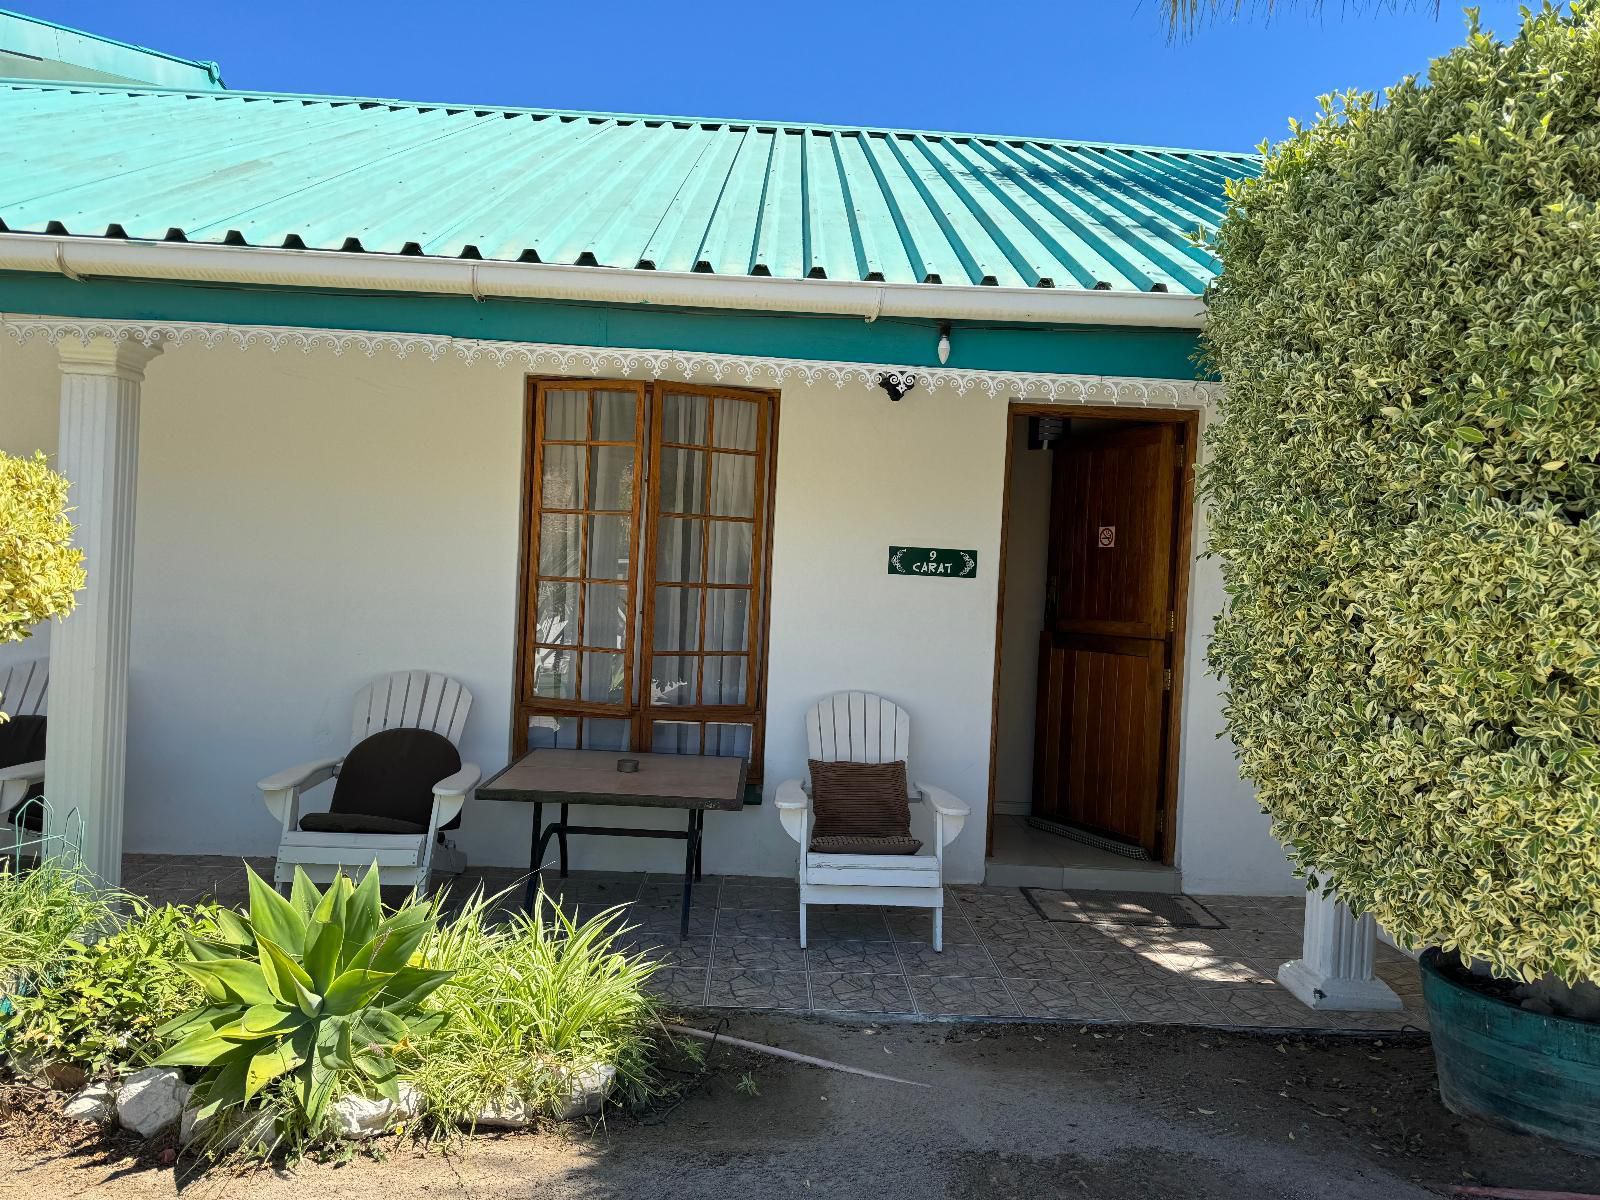 Blue Diamond Lodge Springbok Springbok Northern Cape South Africa House, Building, Architecture